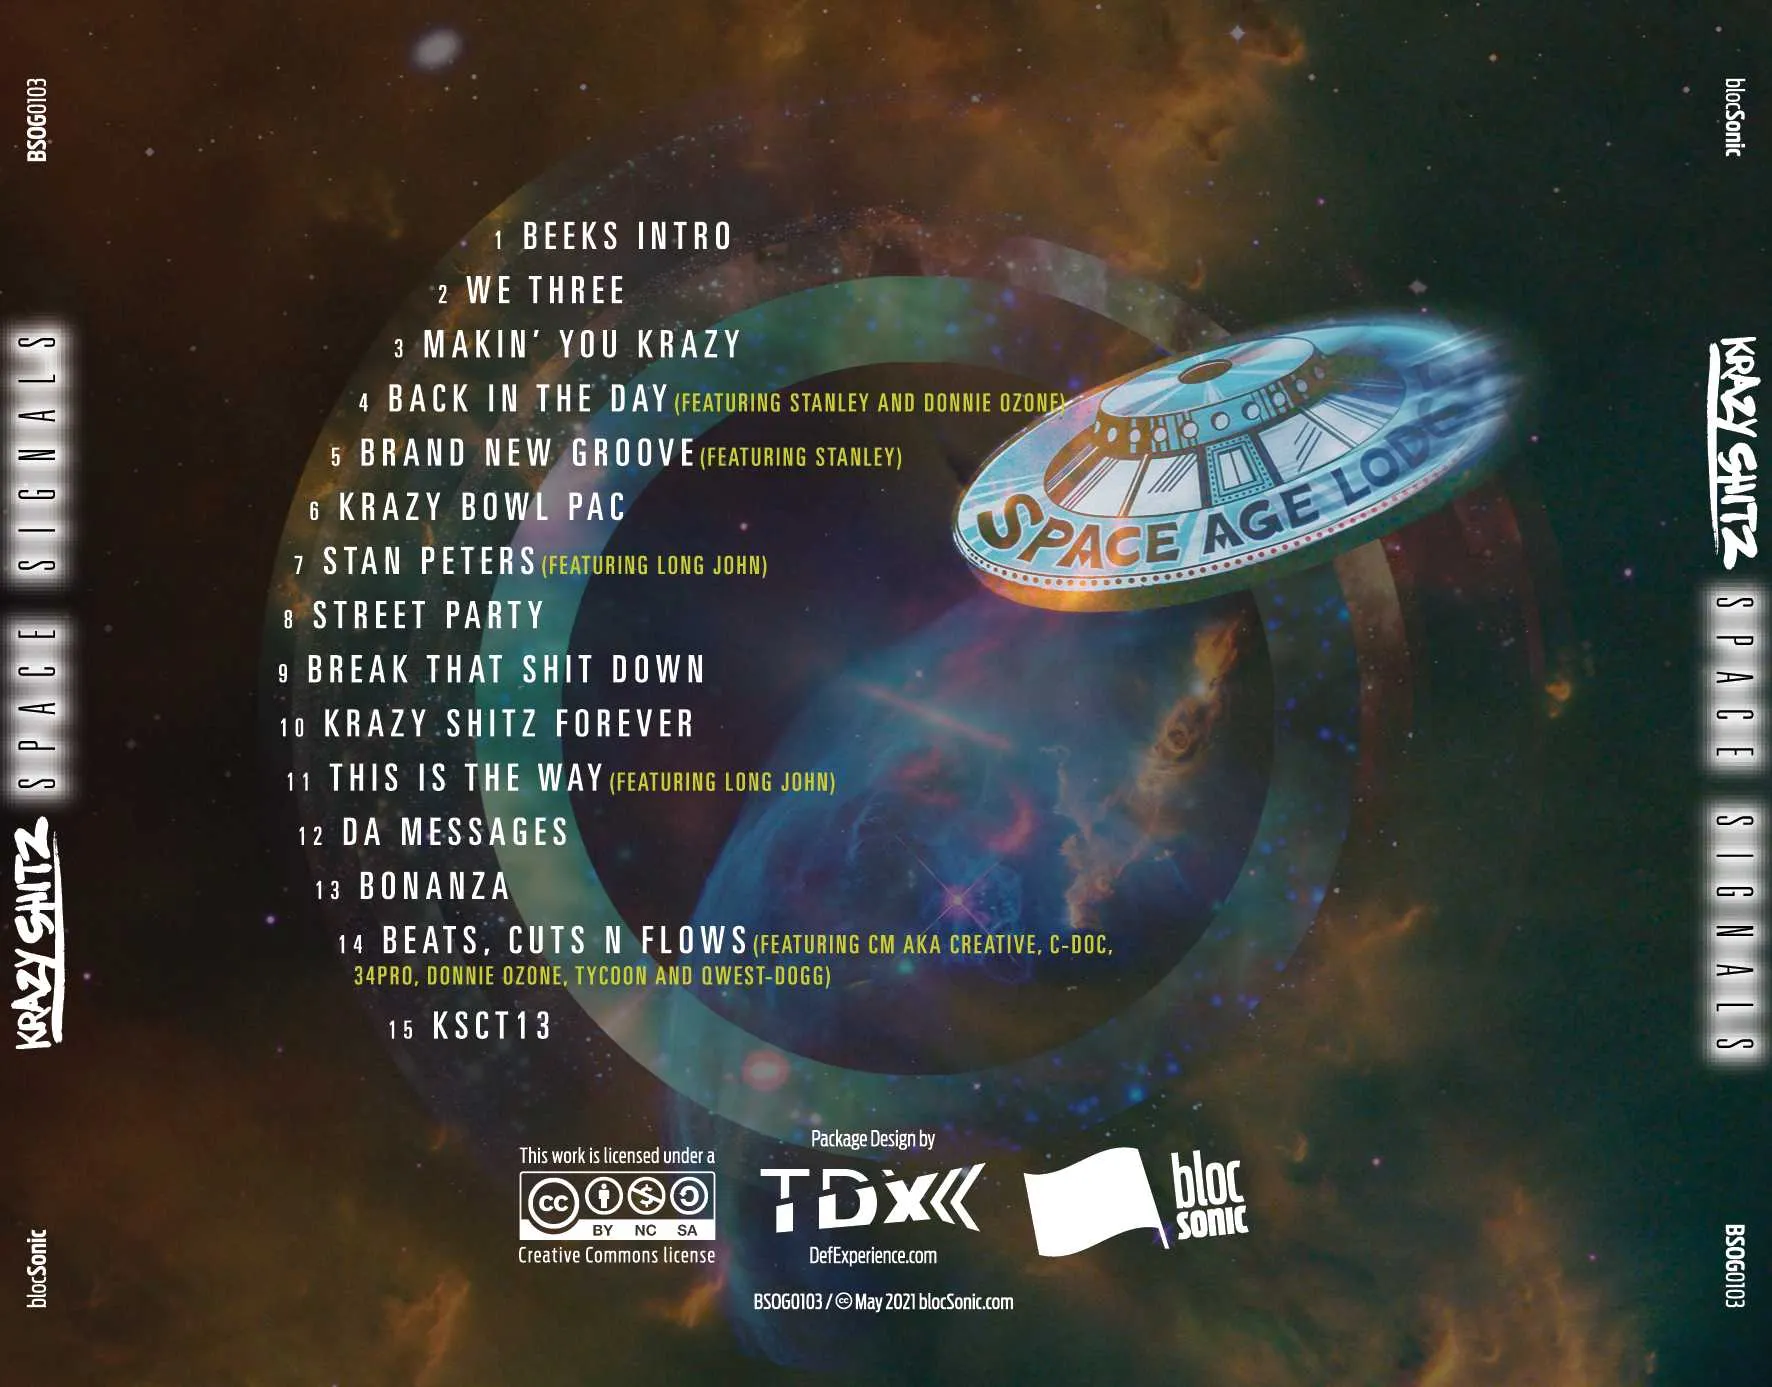 Album traycard for “Space Signals” by Krazy Shitz